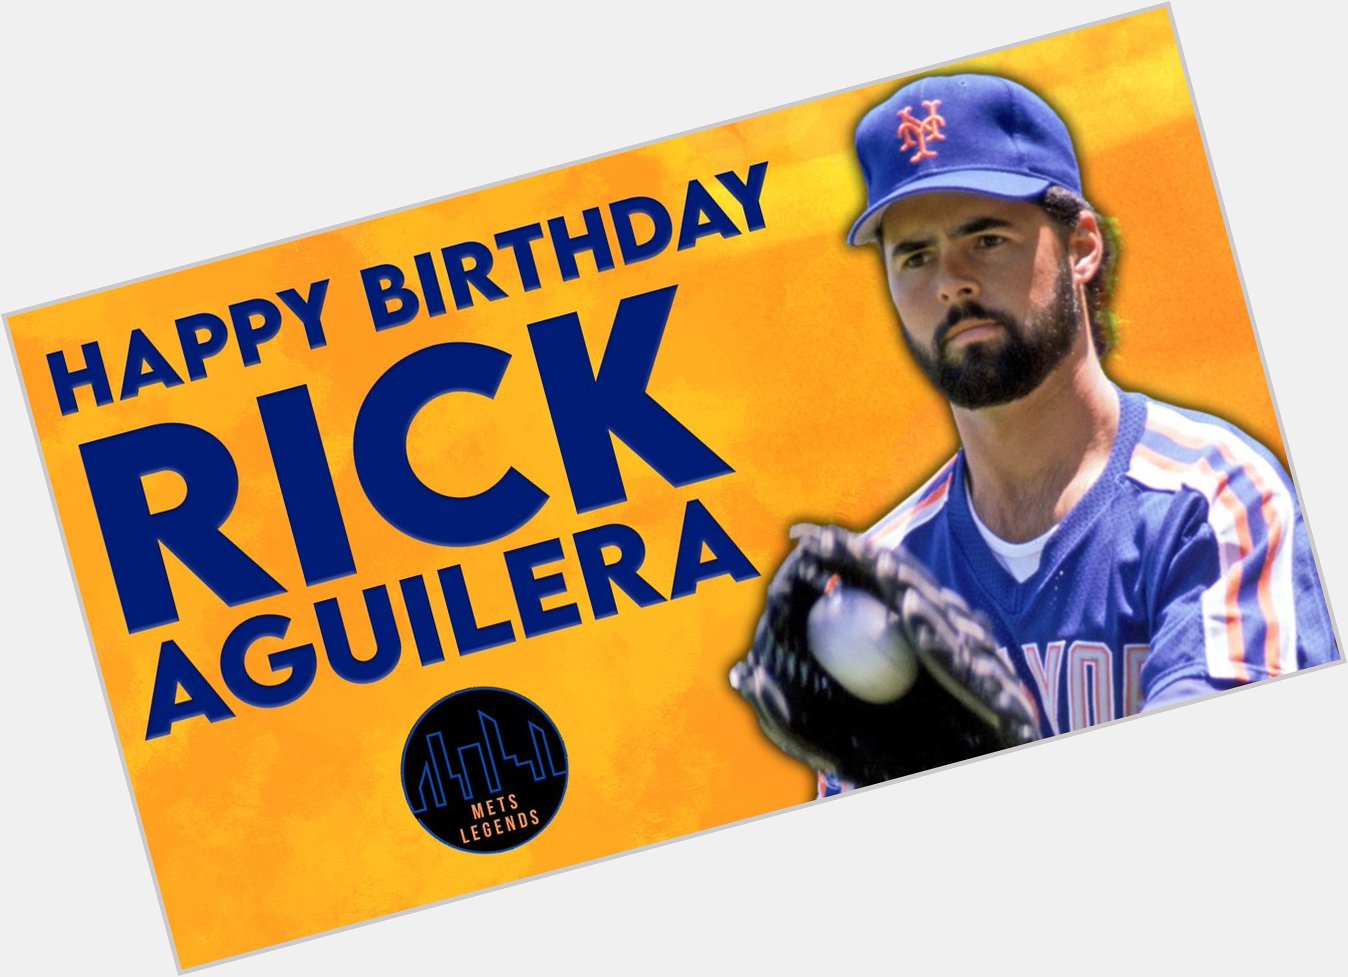 Happy Birthday to 1986 World Series champion, Rick Aguilera! 